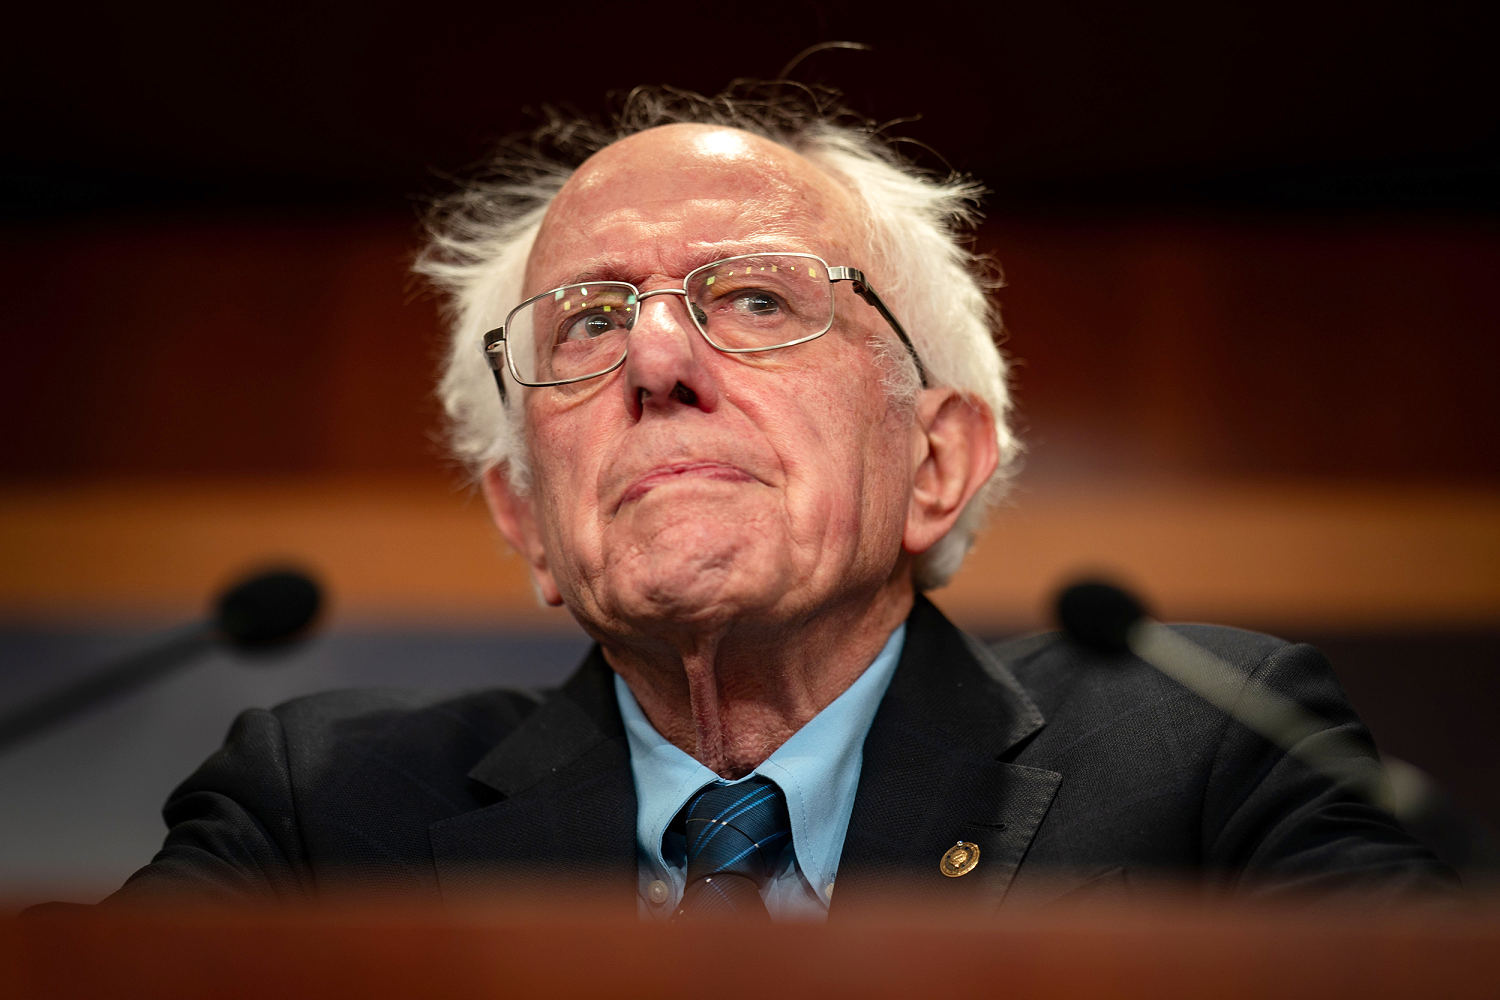 Sen. Bernie Sanders says he'll work hard to elect Harris — but he isn't endorsing her just yet